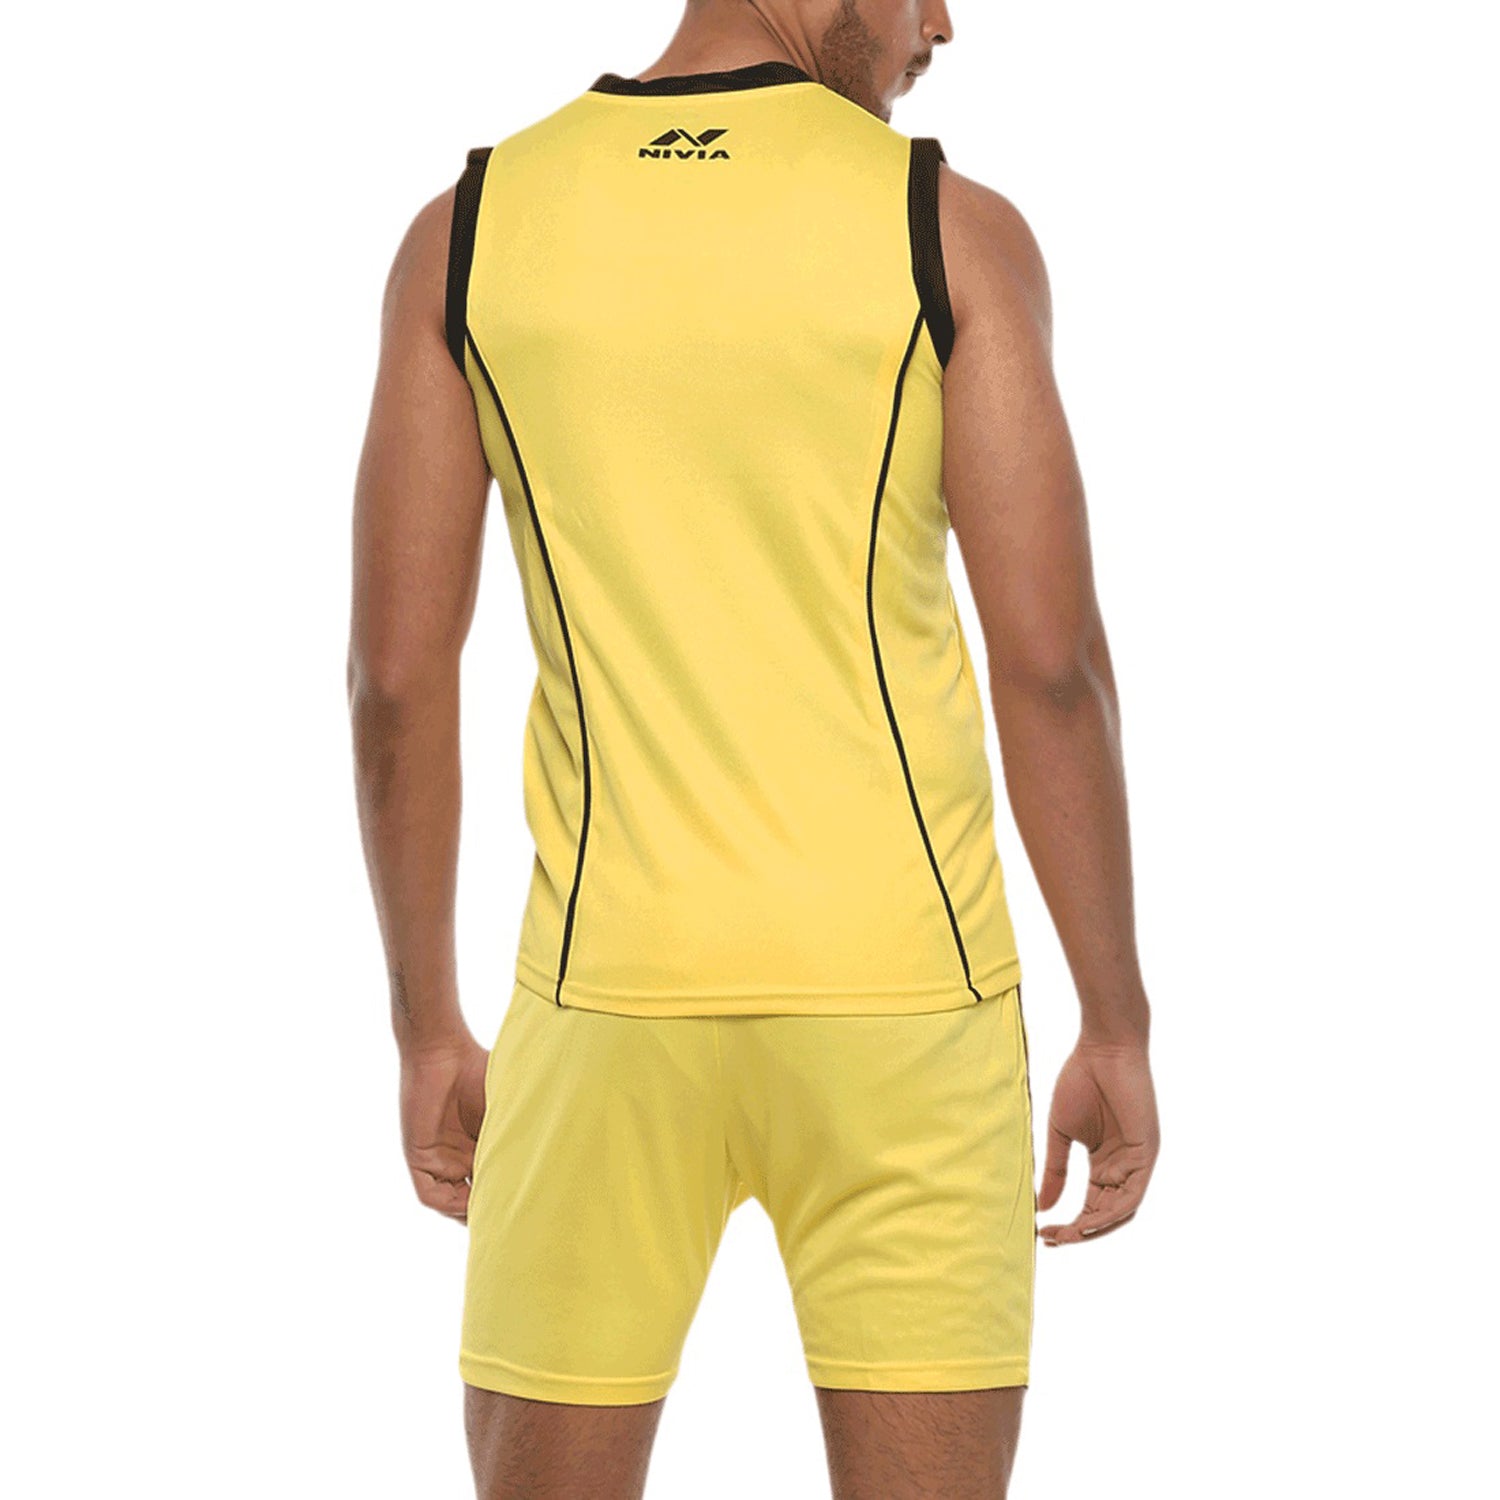 Nivia 2153 Spiral Jersey Set for Men, L.Yellow/Black - Best Price online Prokicksports.com